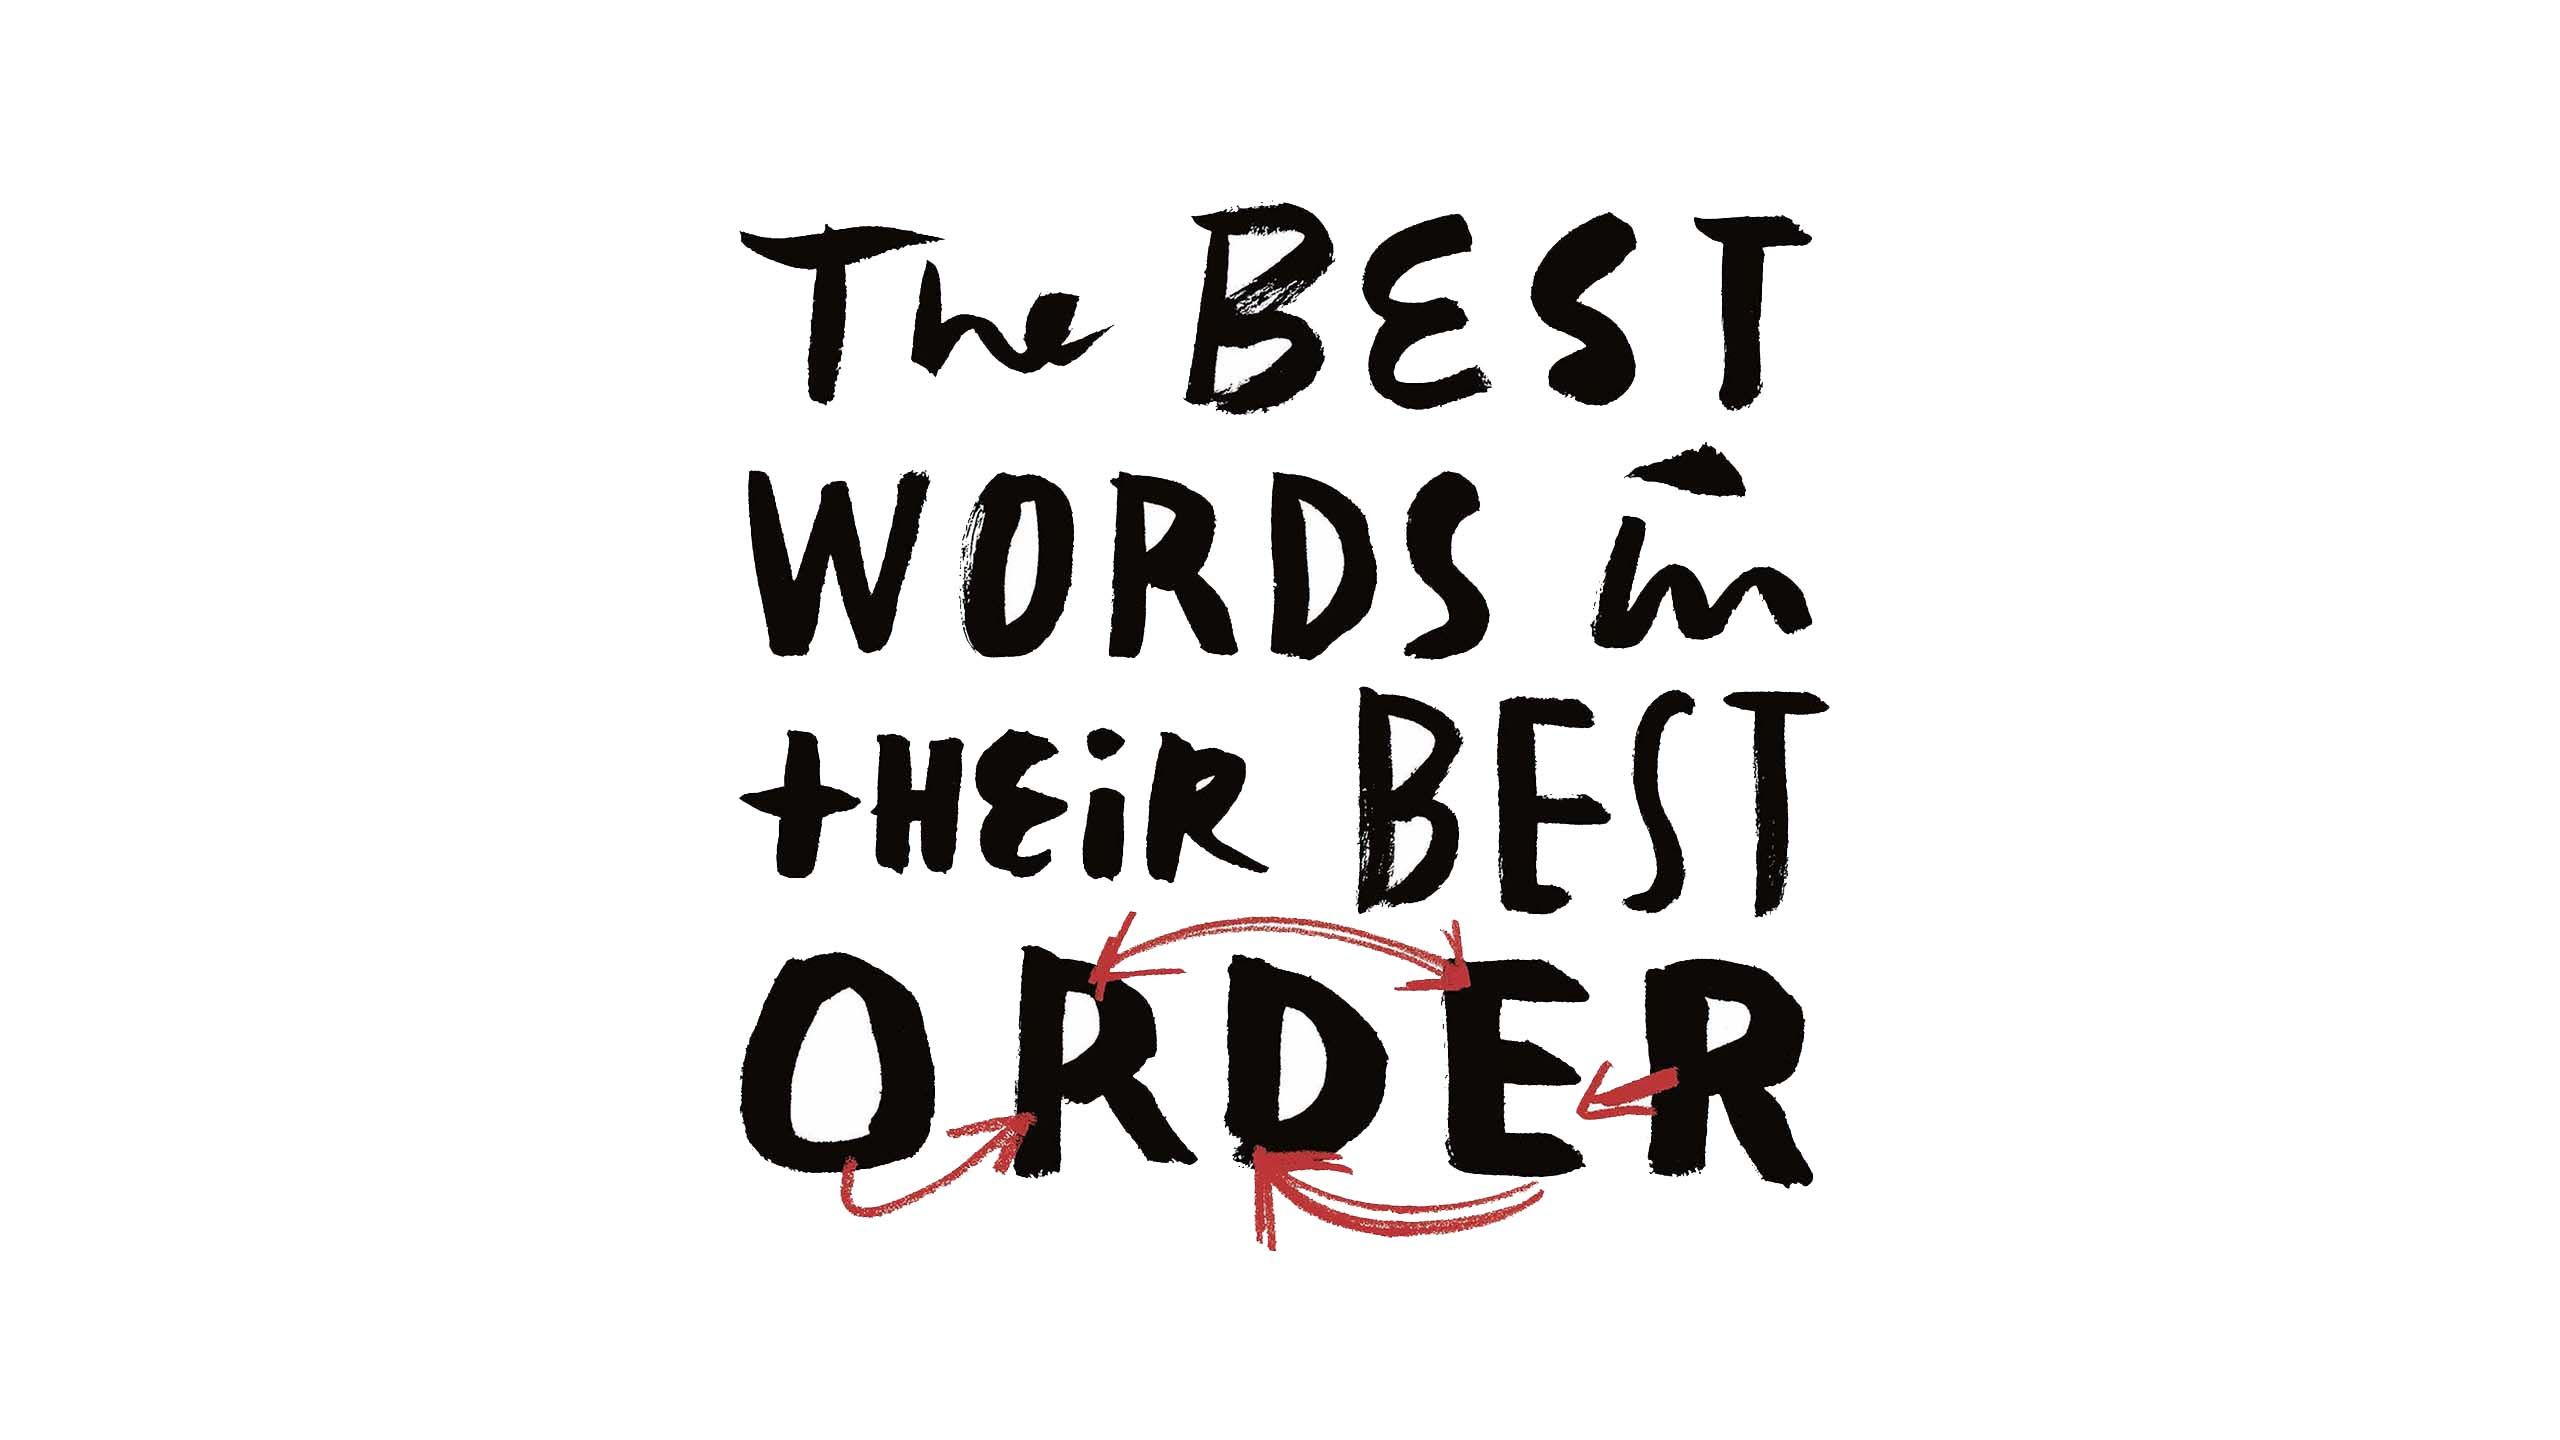 The best words in their best order.